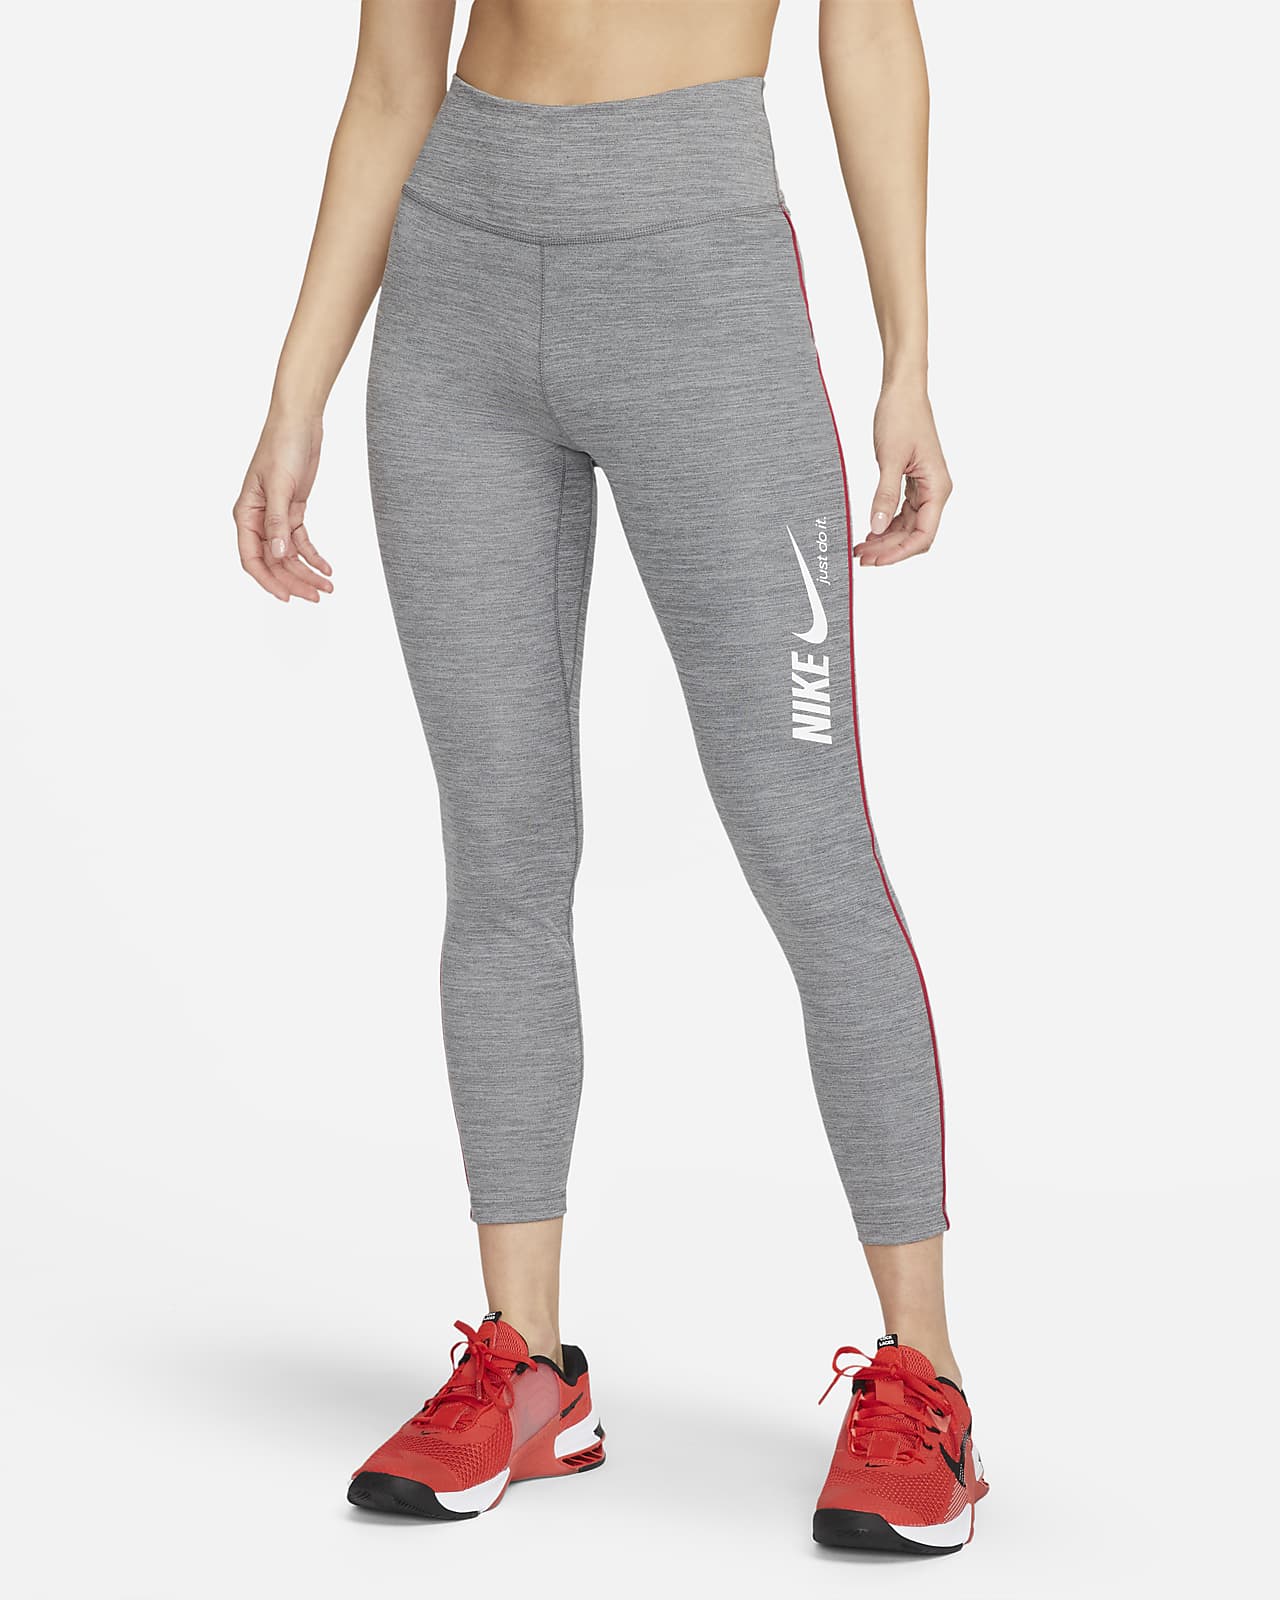 Nike Just do it 7/8 leggings in grey